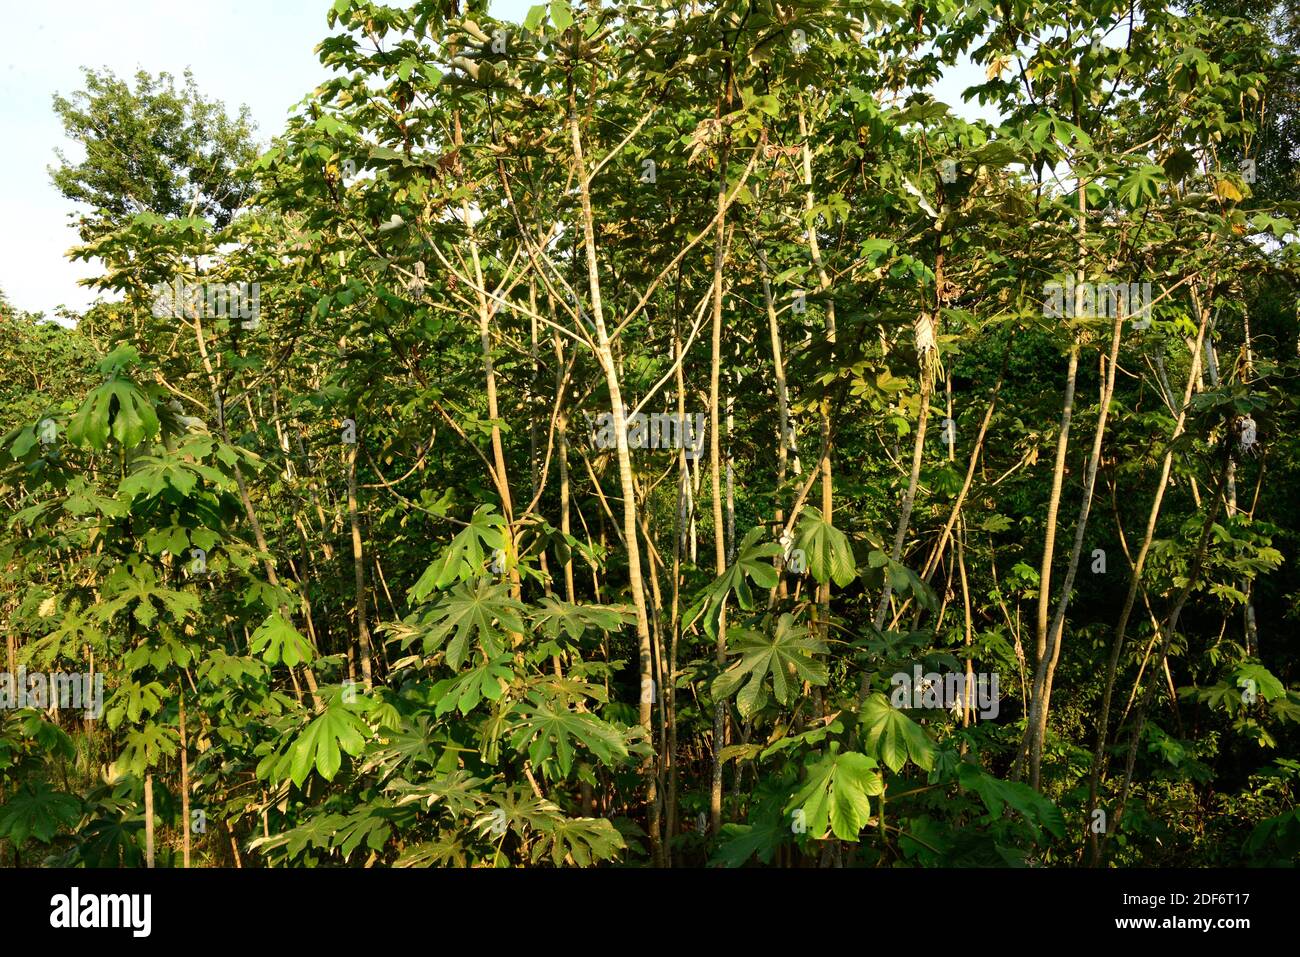 Snakewood (Cecropia peltata) is an evergreen invasive tree native to tropical Americas. This photo was taken near Manaus, Brazil. Stock Photo